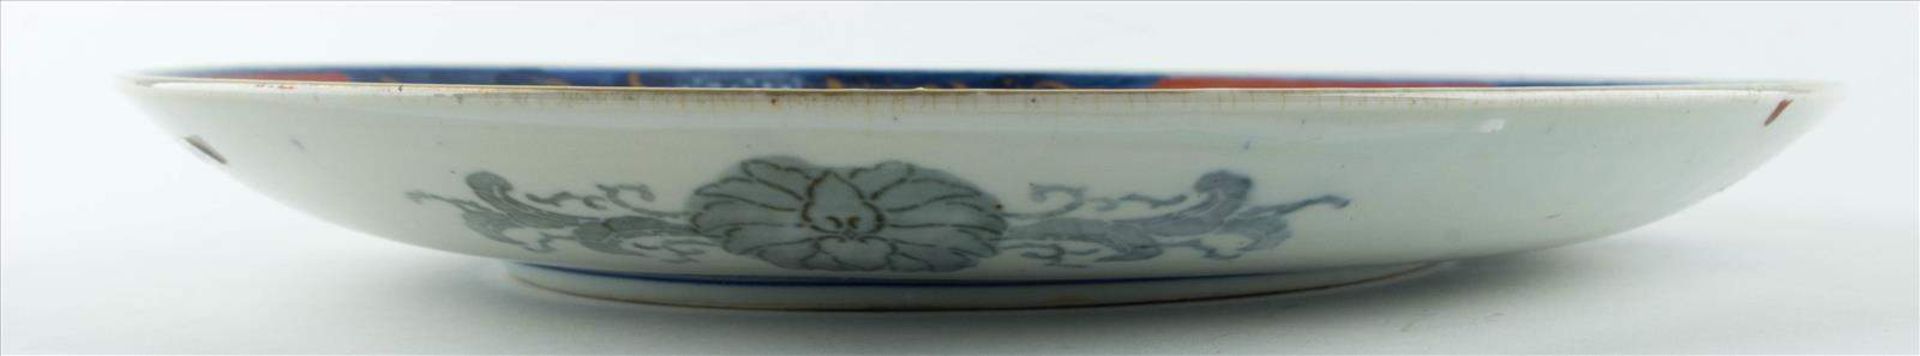 große Imari-Schale um 1900 / Large Imari bowl, about 1900im original Karton, Ø 37,5 cm /
in original - Bild 4 aus 4